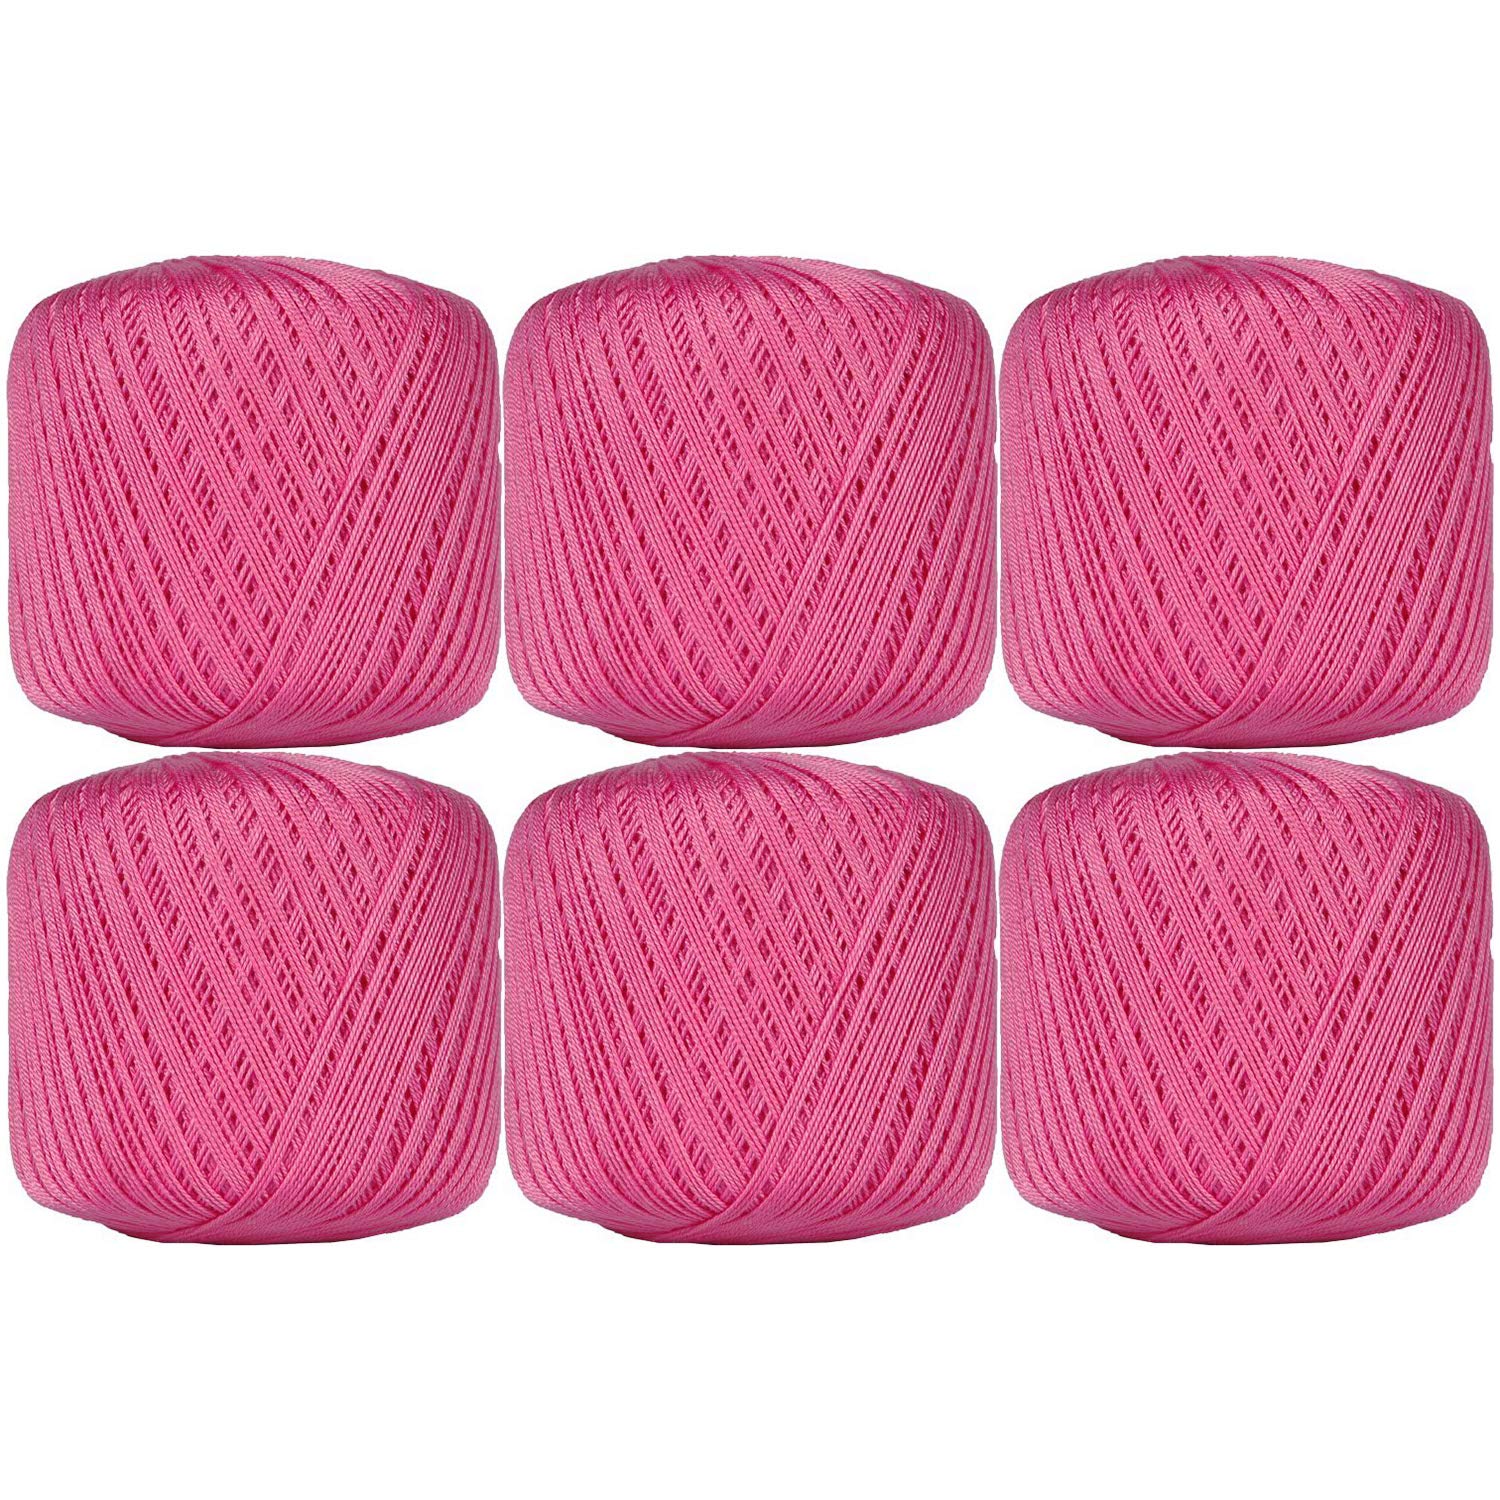 Threadart 6 Ball Pack Threadart 100 Pure Cotton Crochet Thread - Size 10 - Color 35 - Hot Pink - Size 10 And 3 - Singles And Bulk Packs Av